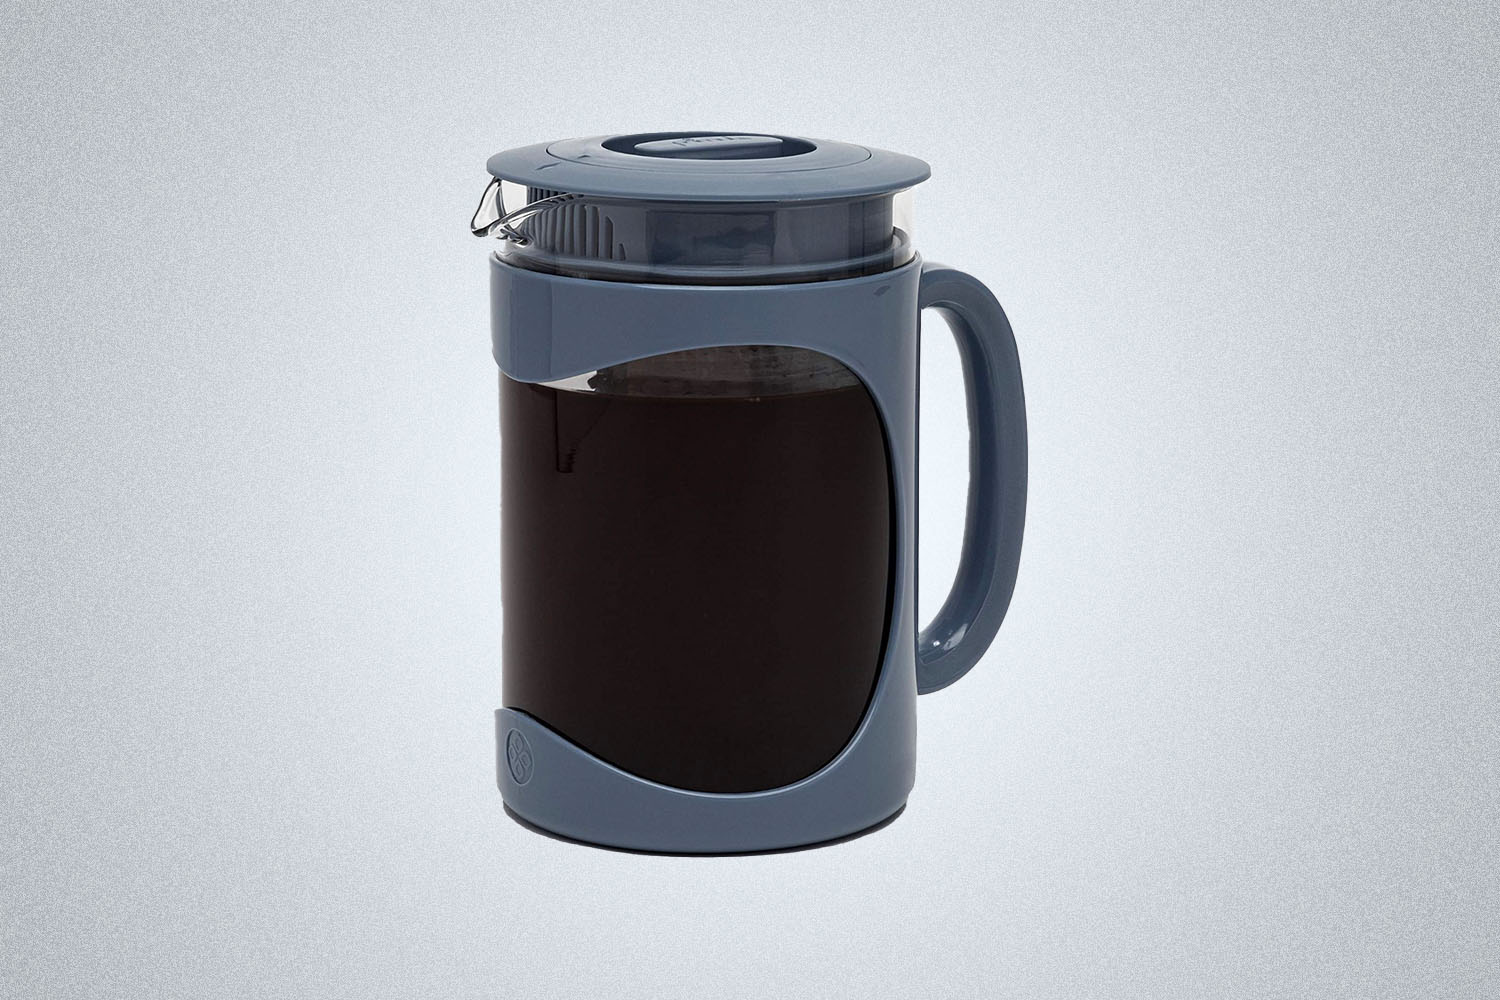 https://www.insidehook.com/wp-content/uploads/2023/04/Primula-Burke-Deluxe-Cold-Brew-Iced-Coffee-Maker.jpg?fit=1200%2C800